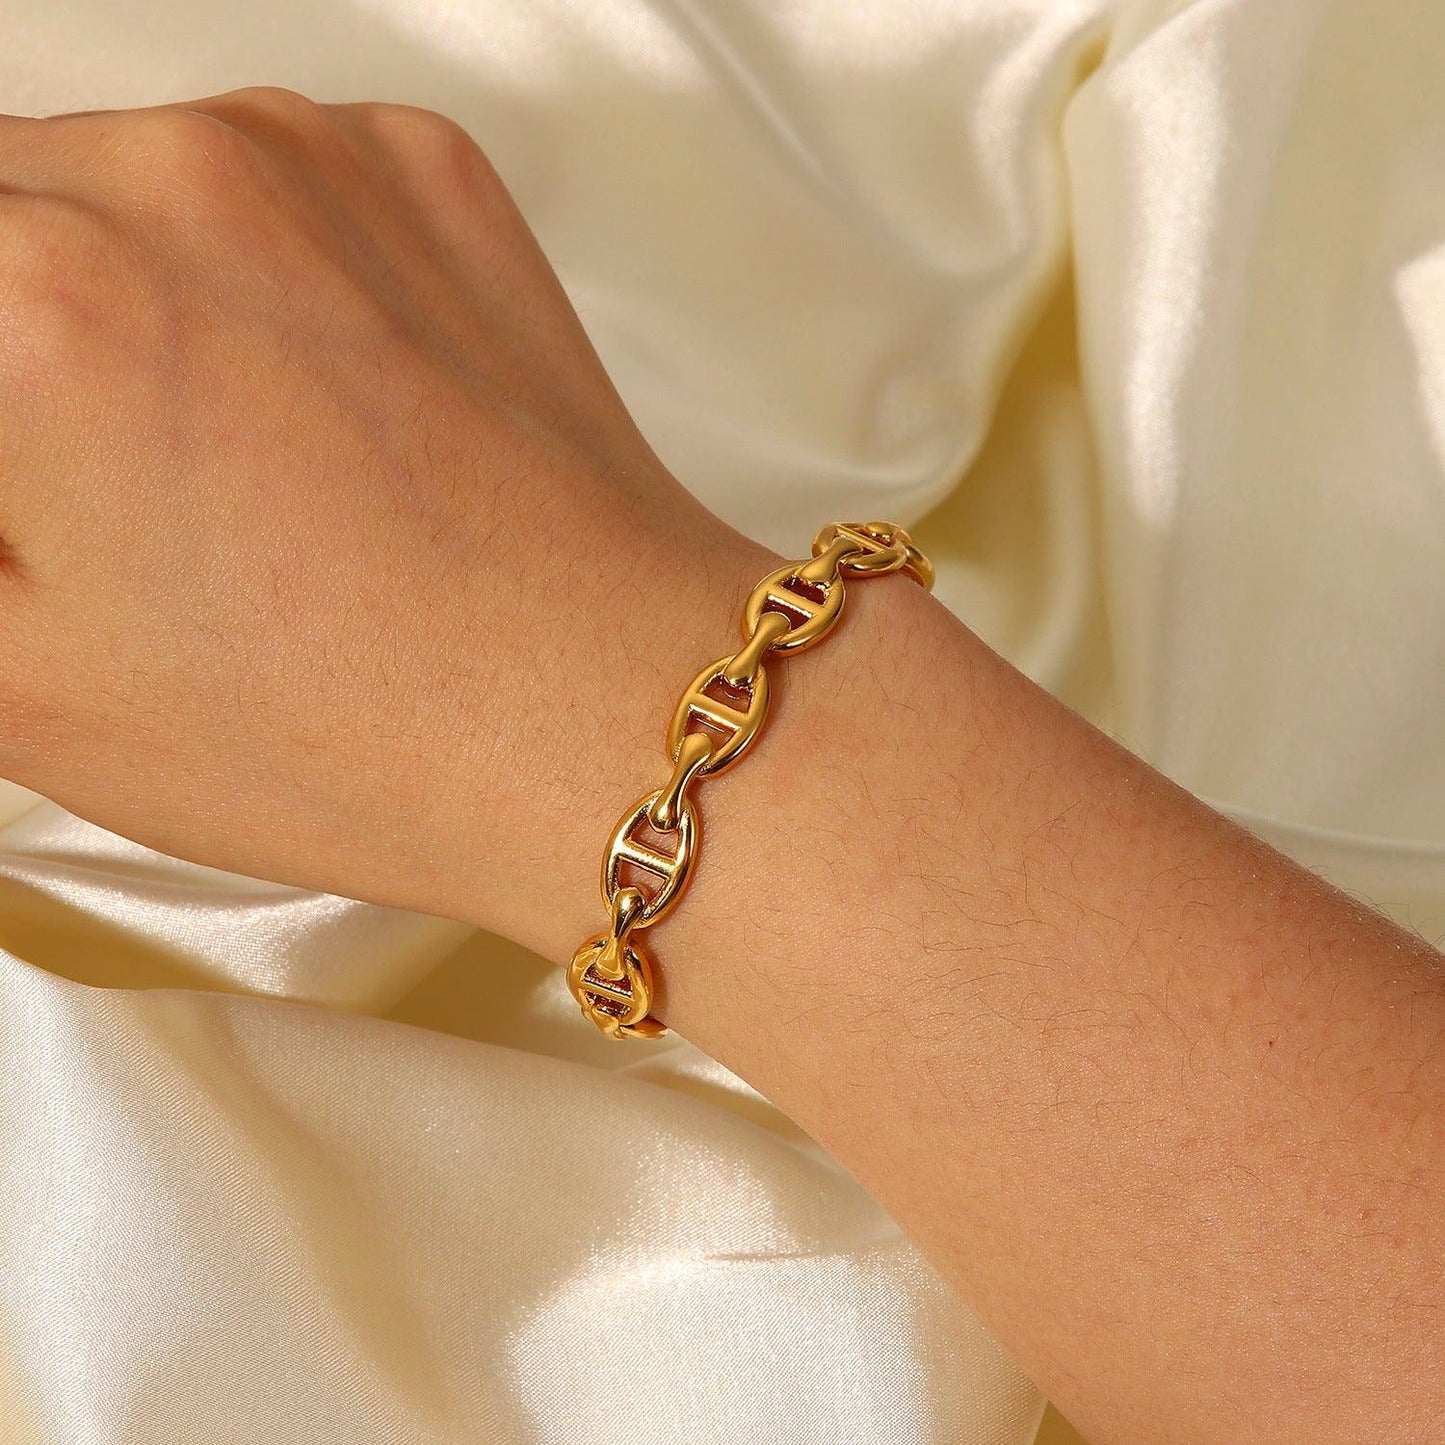 B8.18K Gold Fashion simple and generous open bracelet - Elle Royal Jewelry